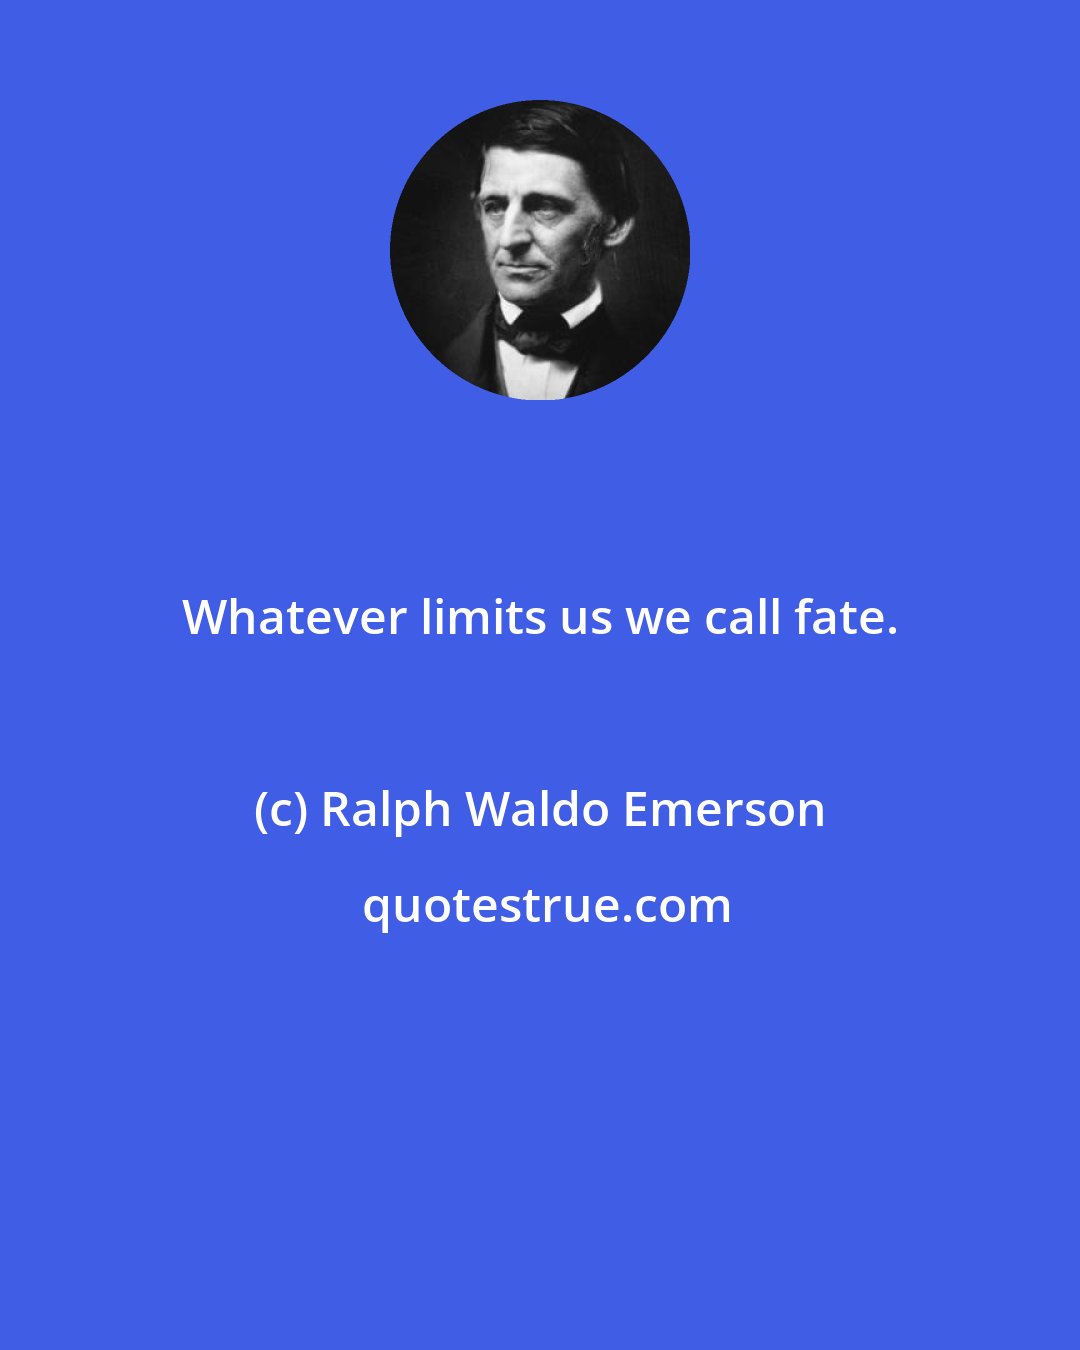 Ralph Waldo Emerson: Whatever limits us we call fate.